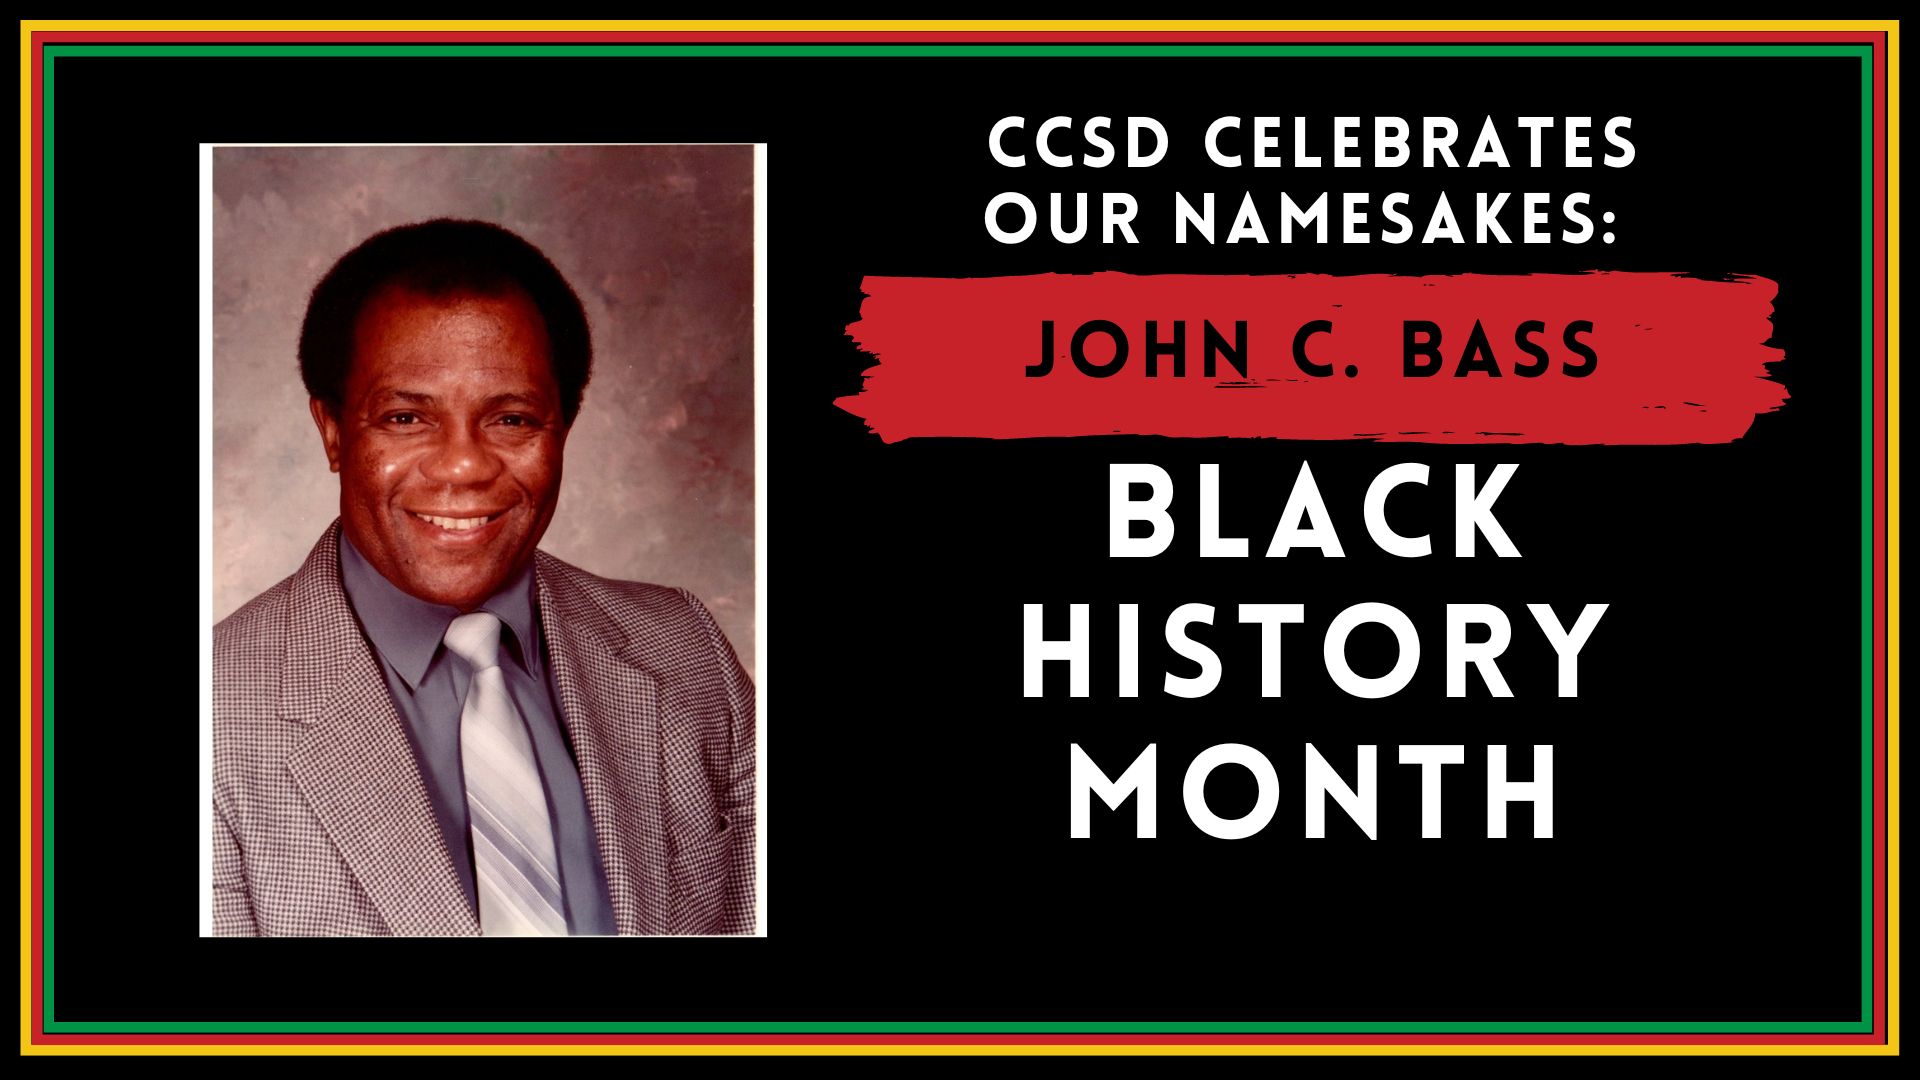 Celebrating CCSD leaders: John C. Bass